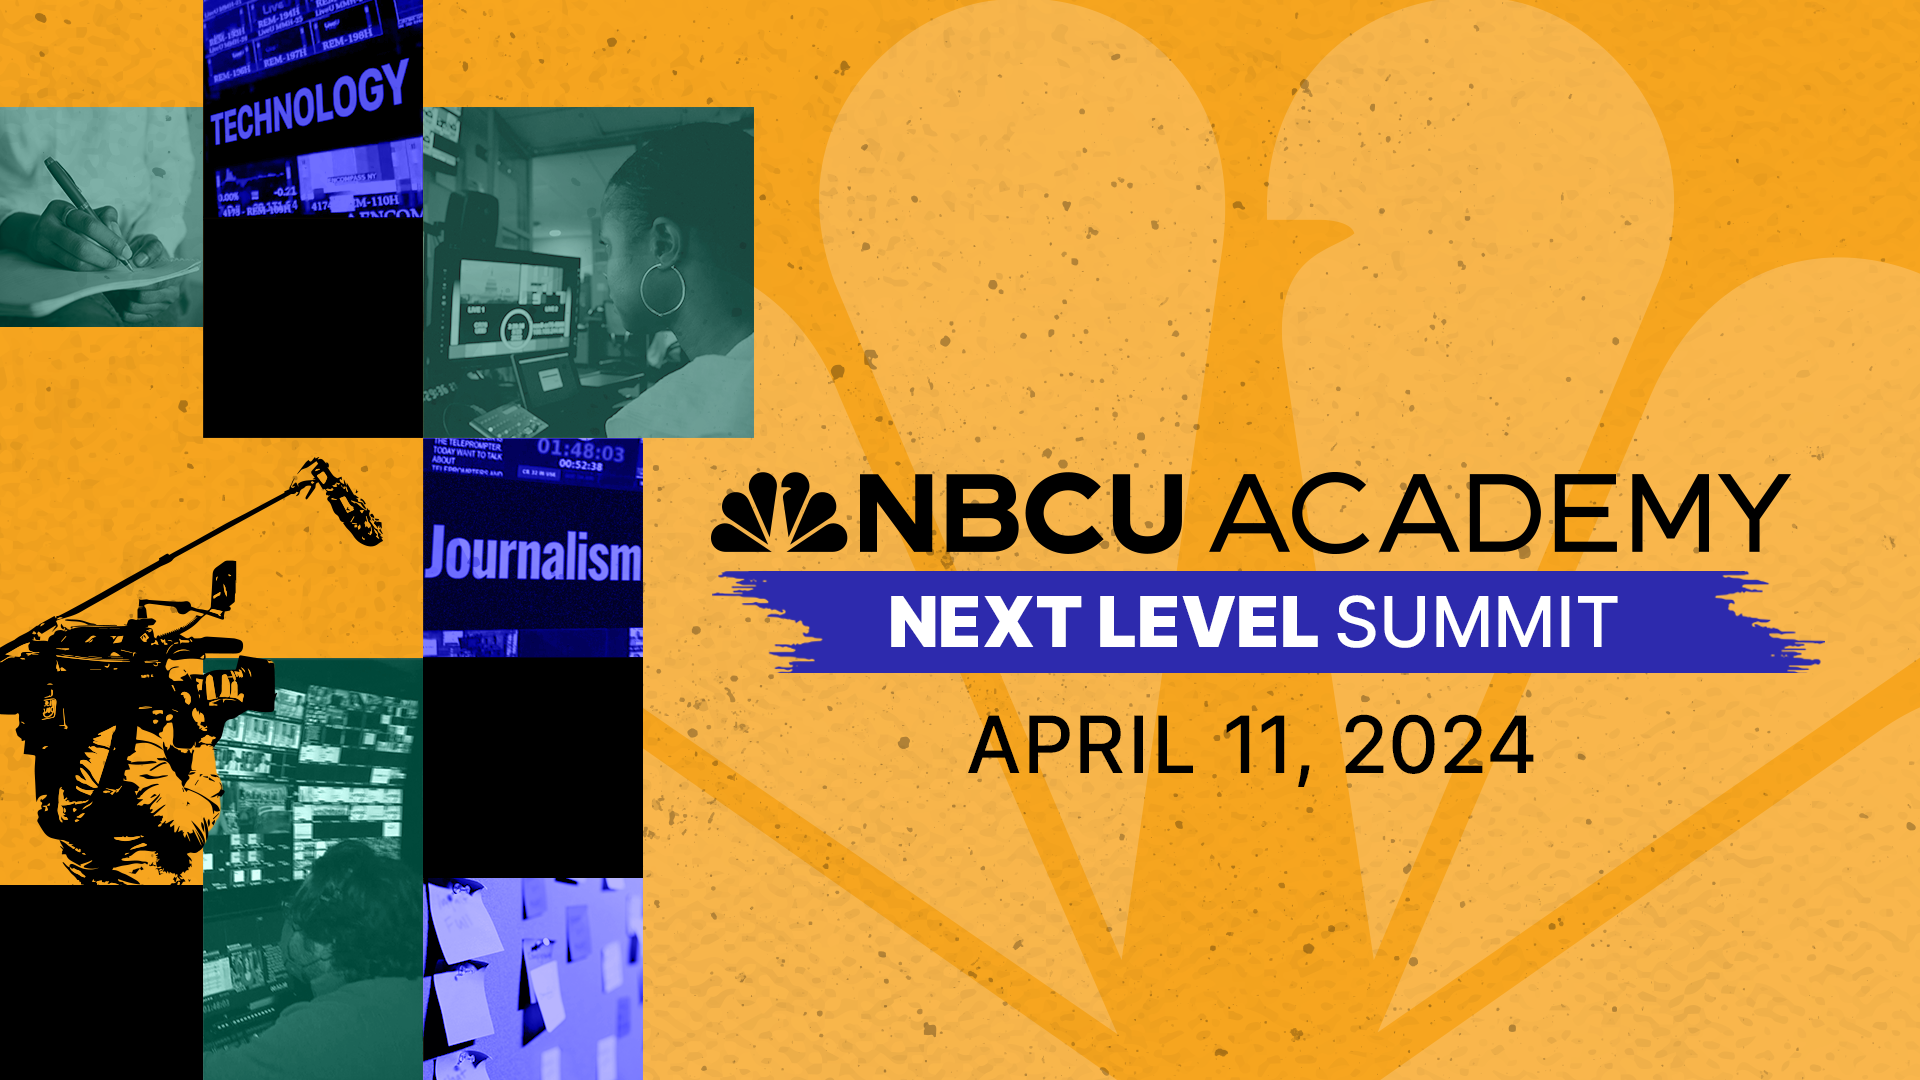 NBCU Academy Next Level Summit April 11, 2024